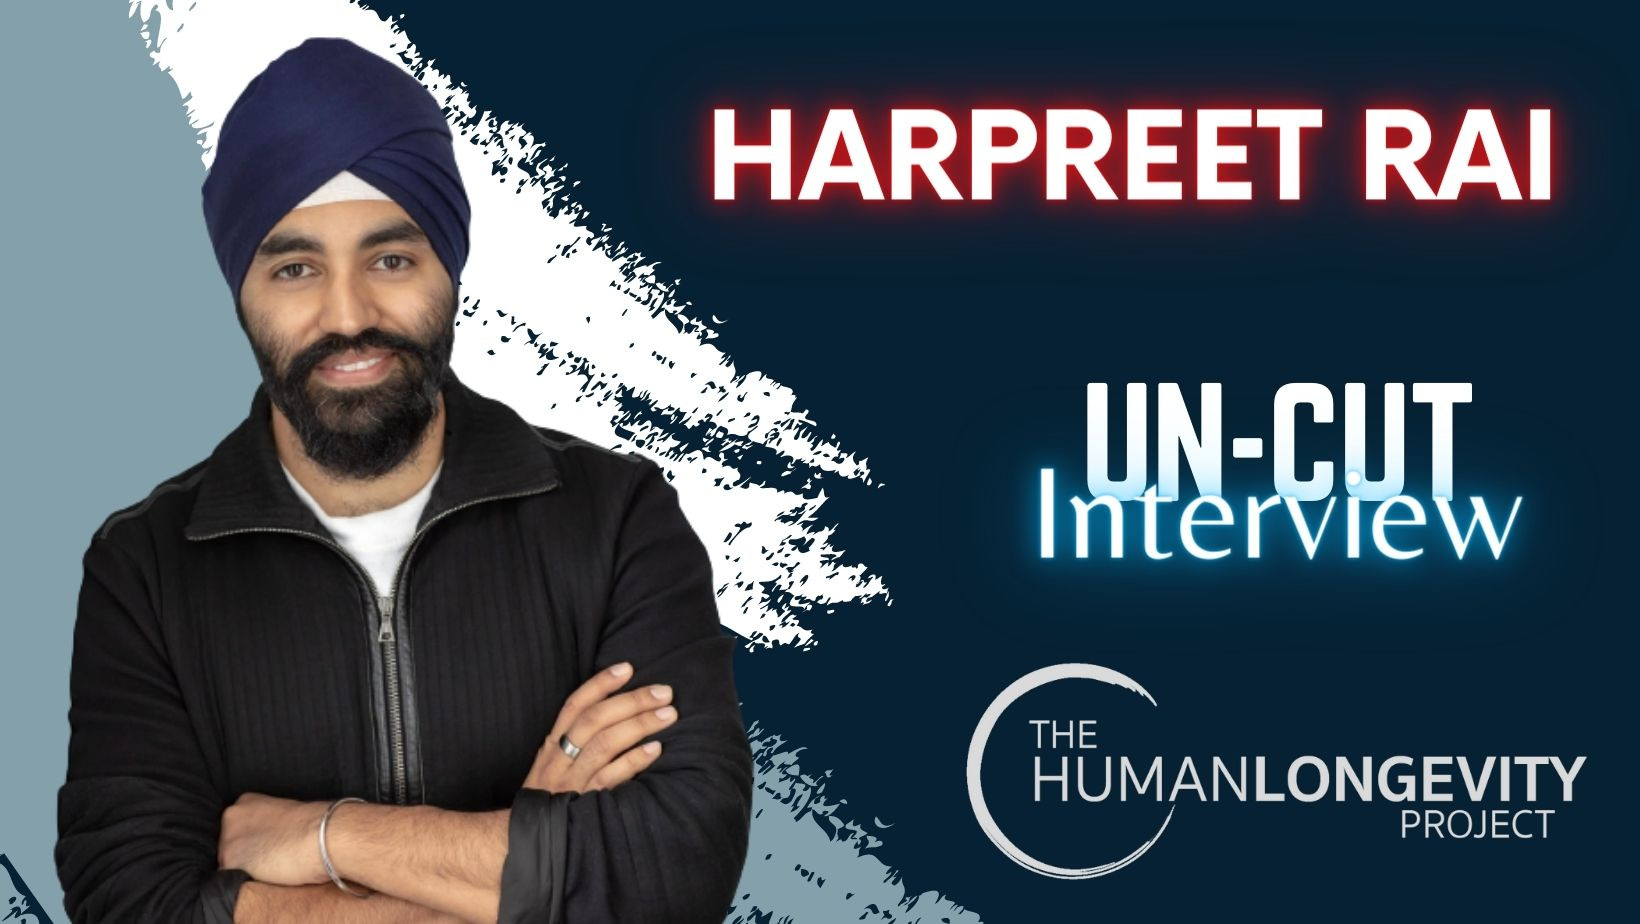 Human Longevity Project Uncut Interview With Harpreet Rai